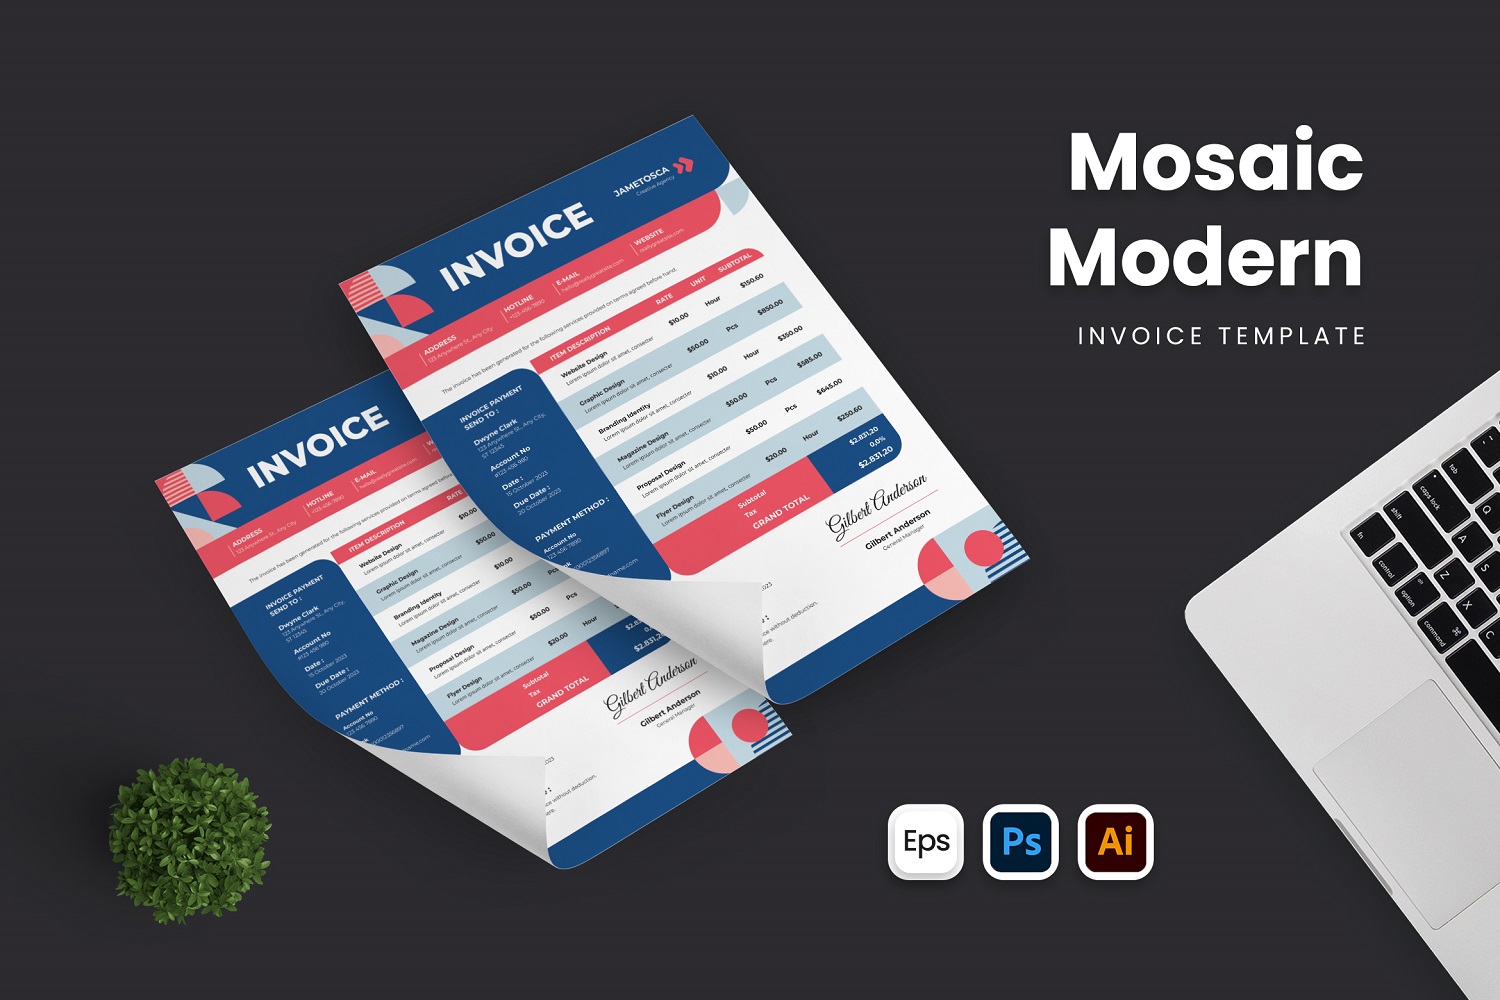 Mosaic Modern Paid Invoice